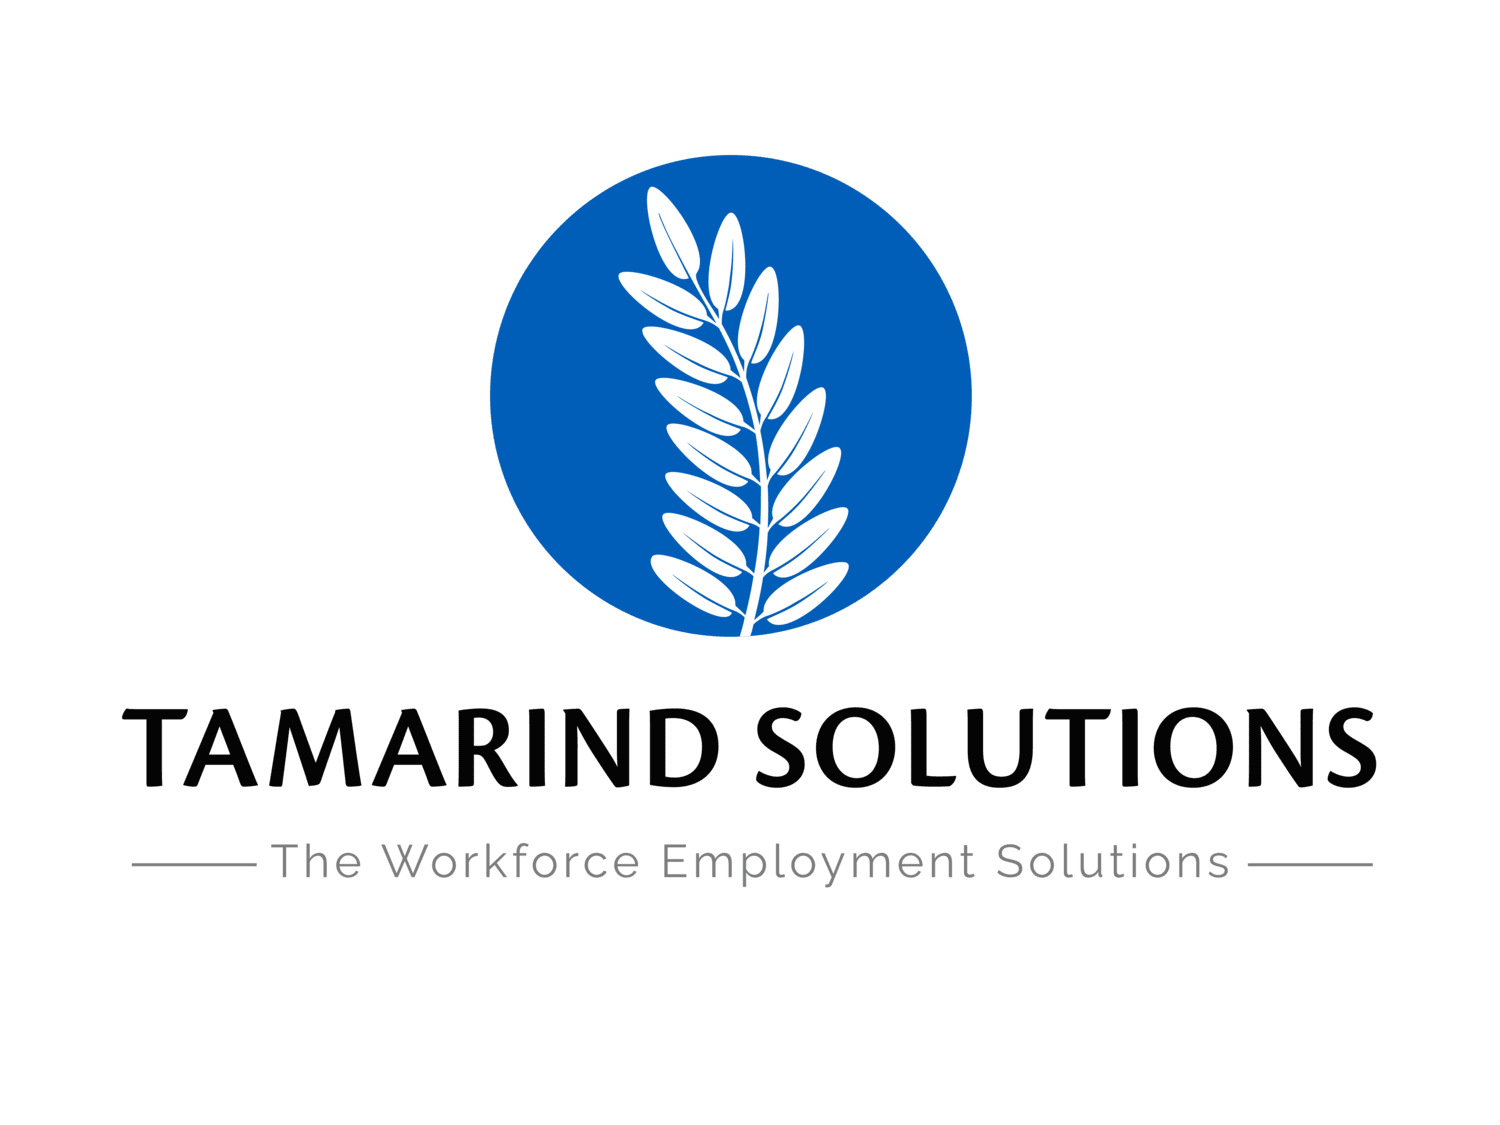 Tamarind Solutions